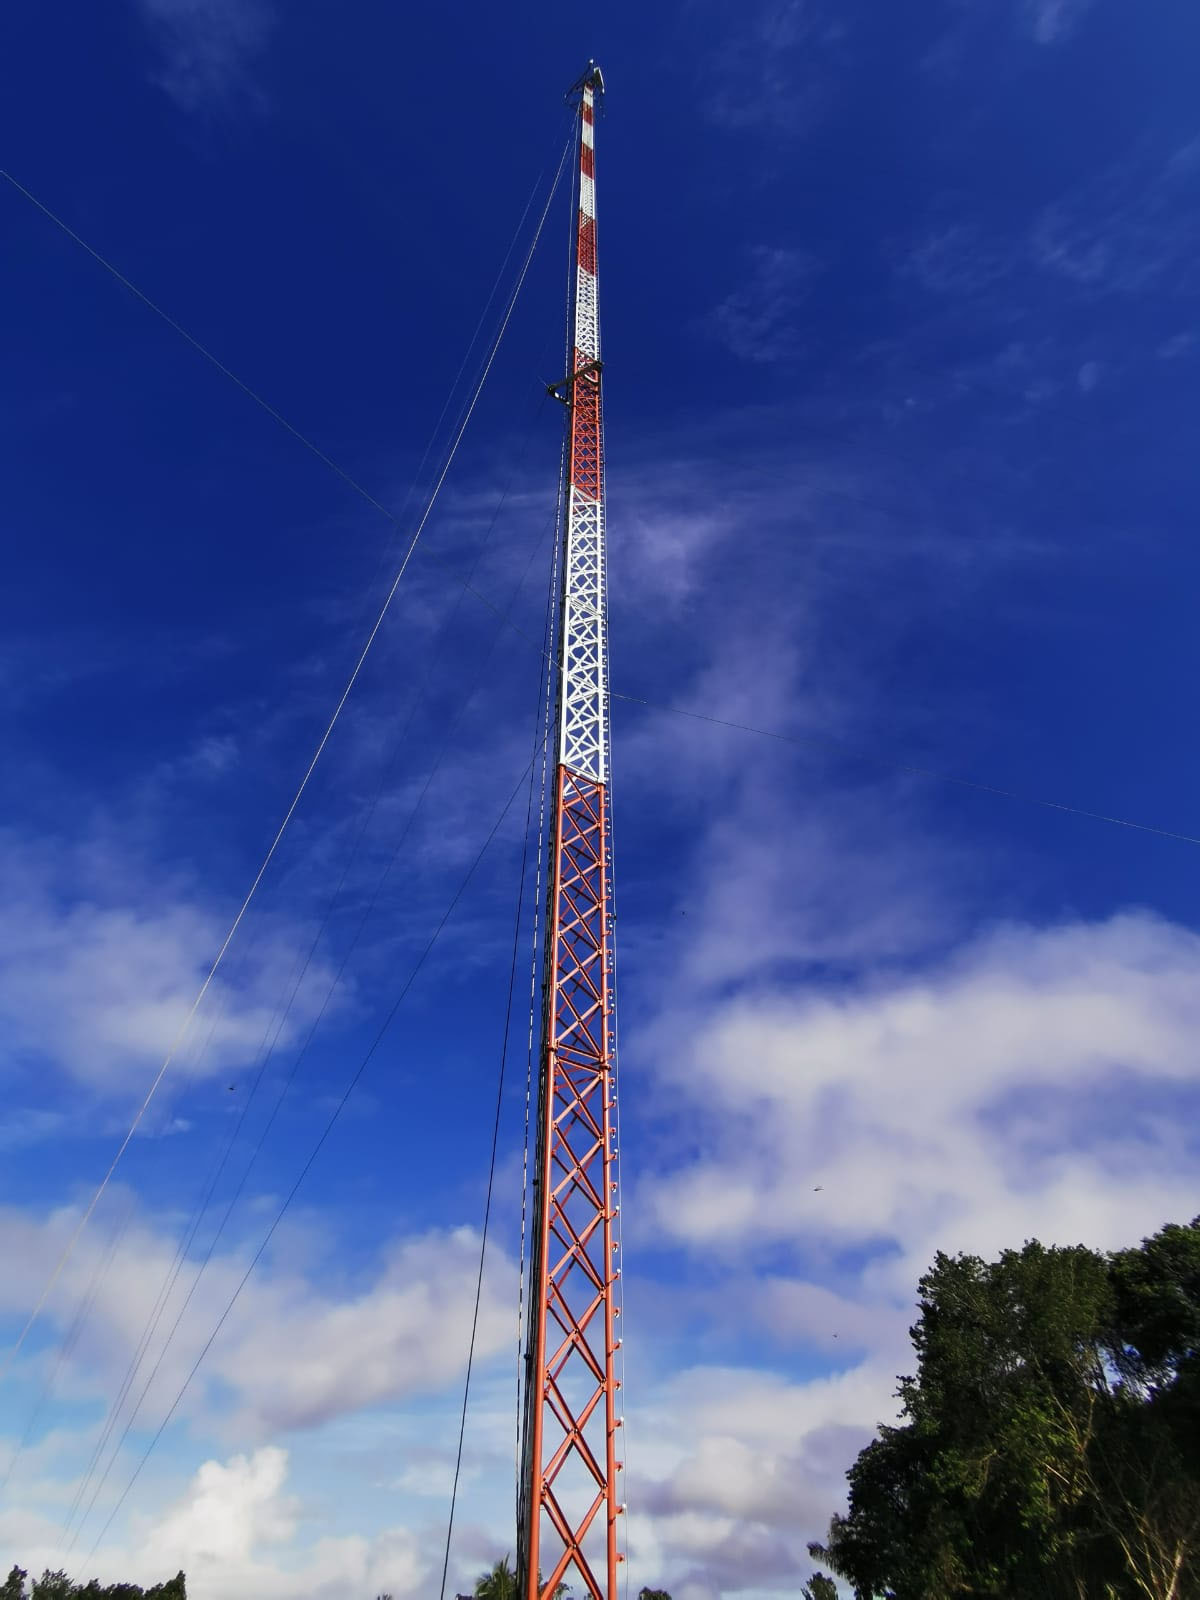 The new Digicel tower at Kabakaburi 